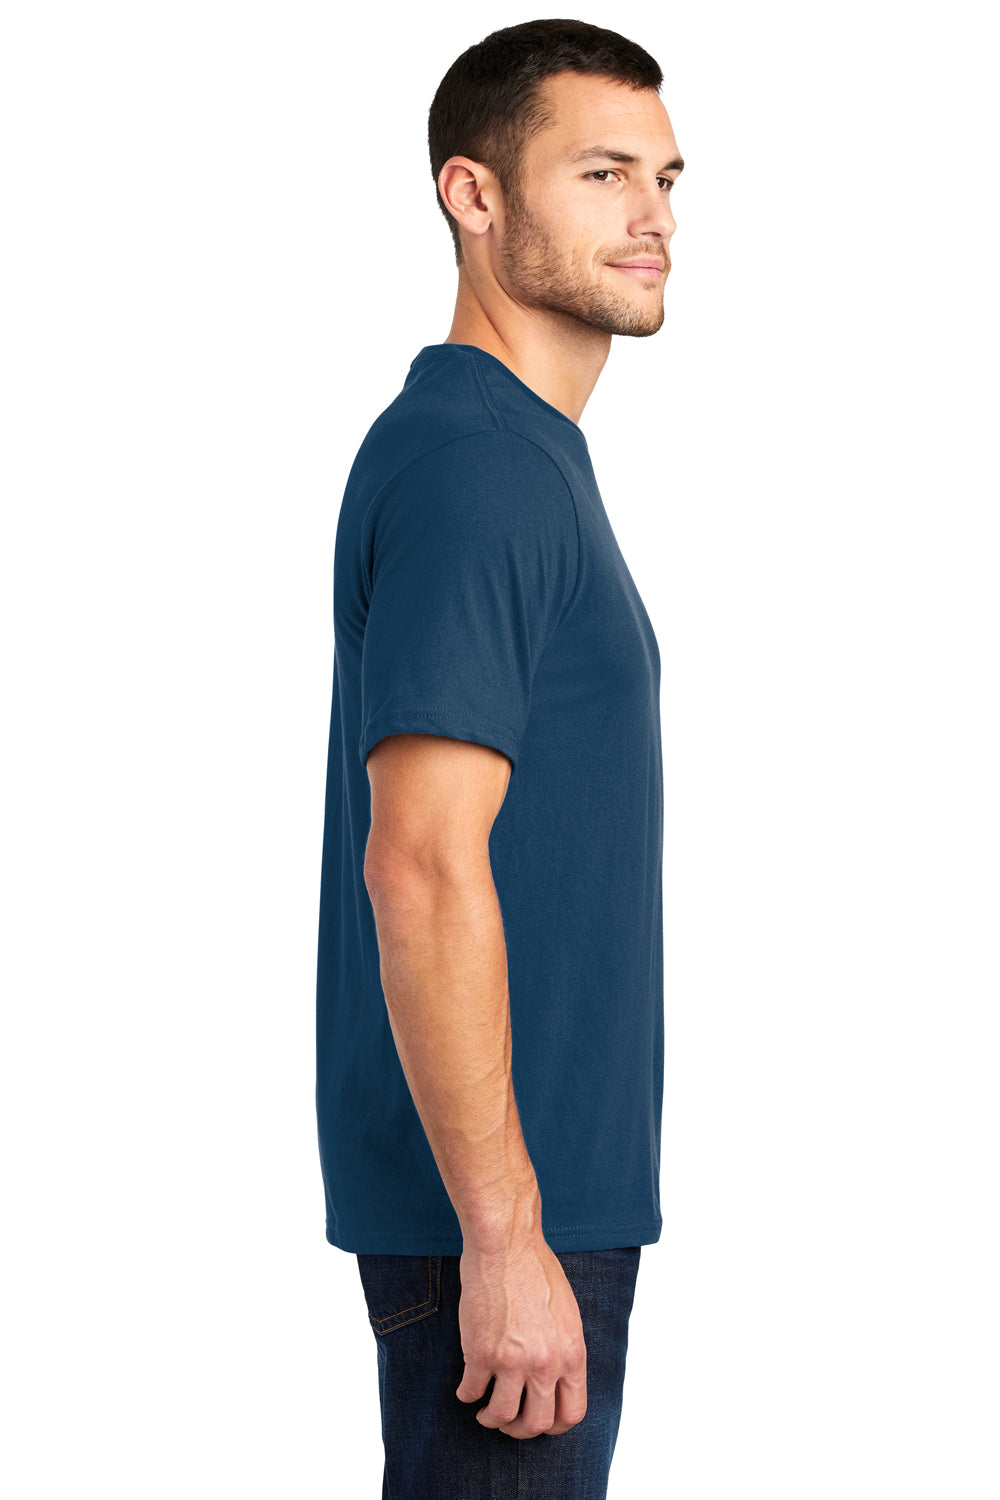 District DT6000 Mens Very Important Short Sleeve Crewneck T-Shirt Neptune Blue Side